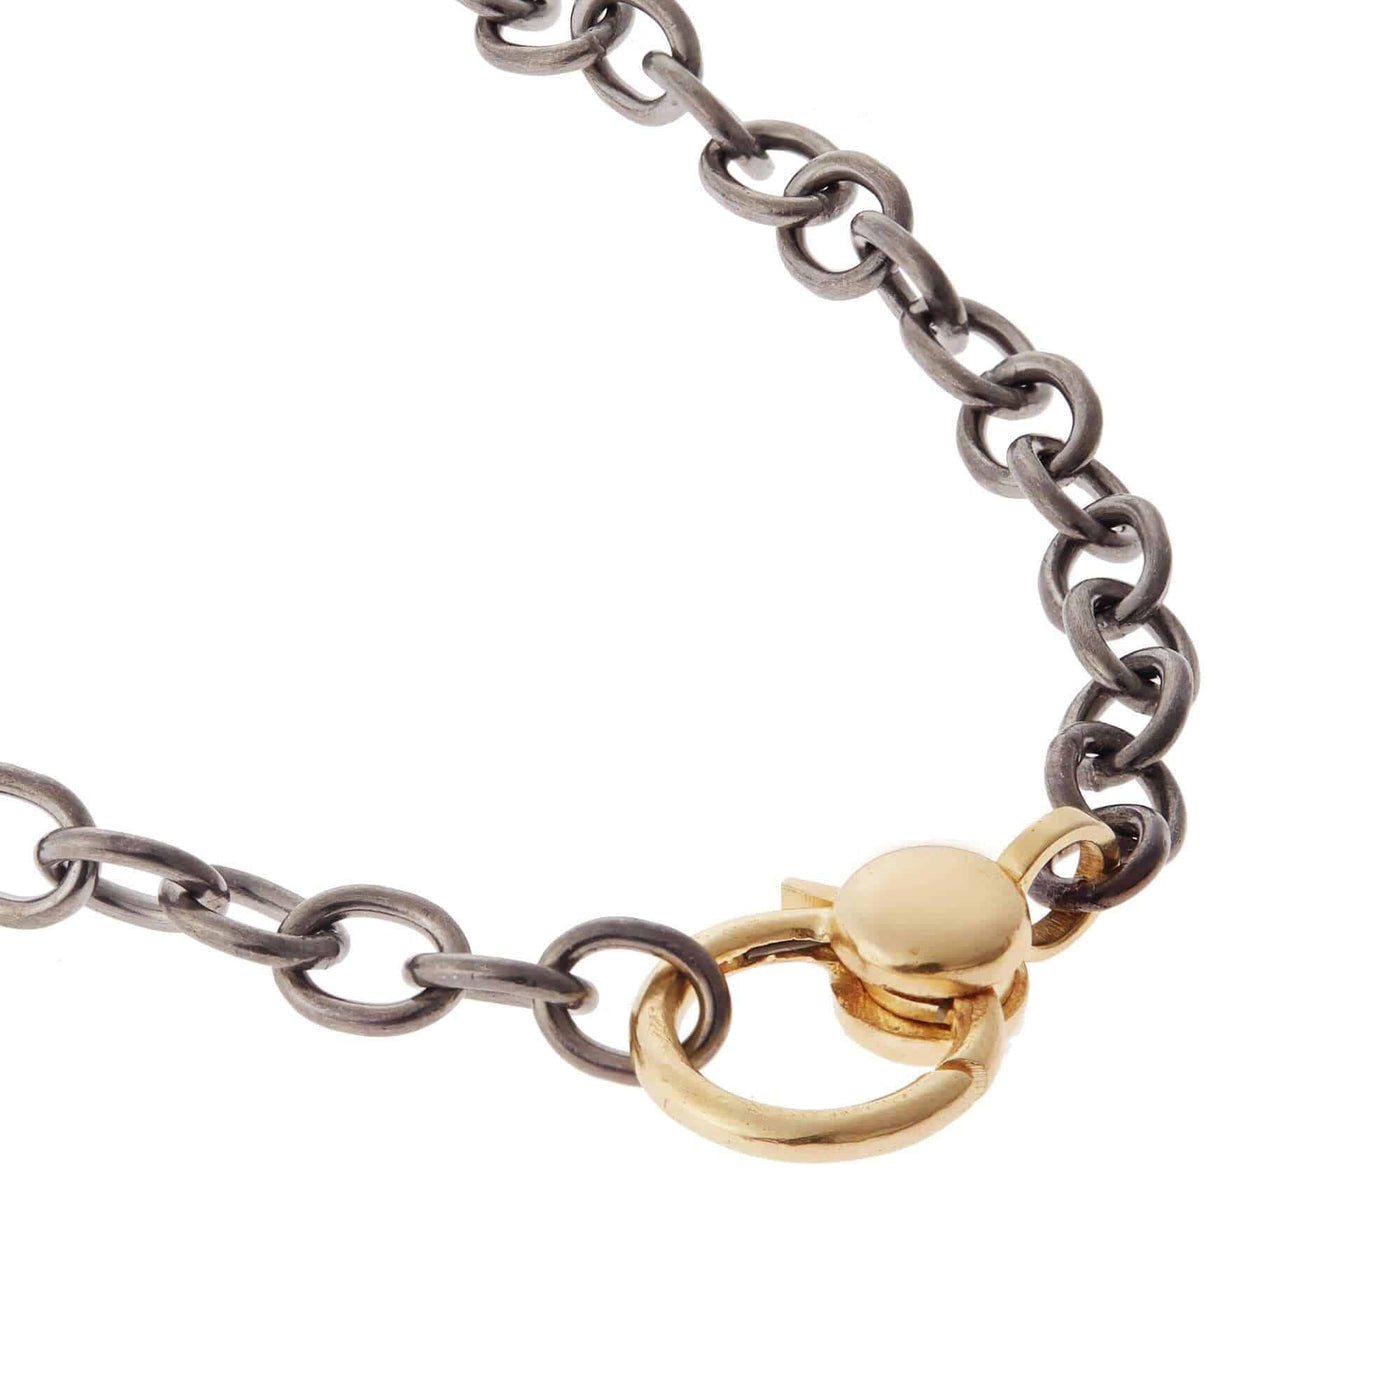 Peace Charm Gold Lock Chain Bracelet - SYMBOLS - Ileana Makri store